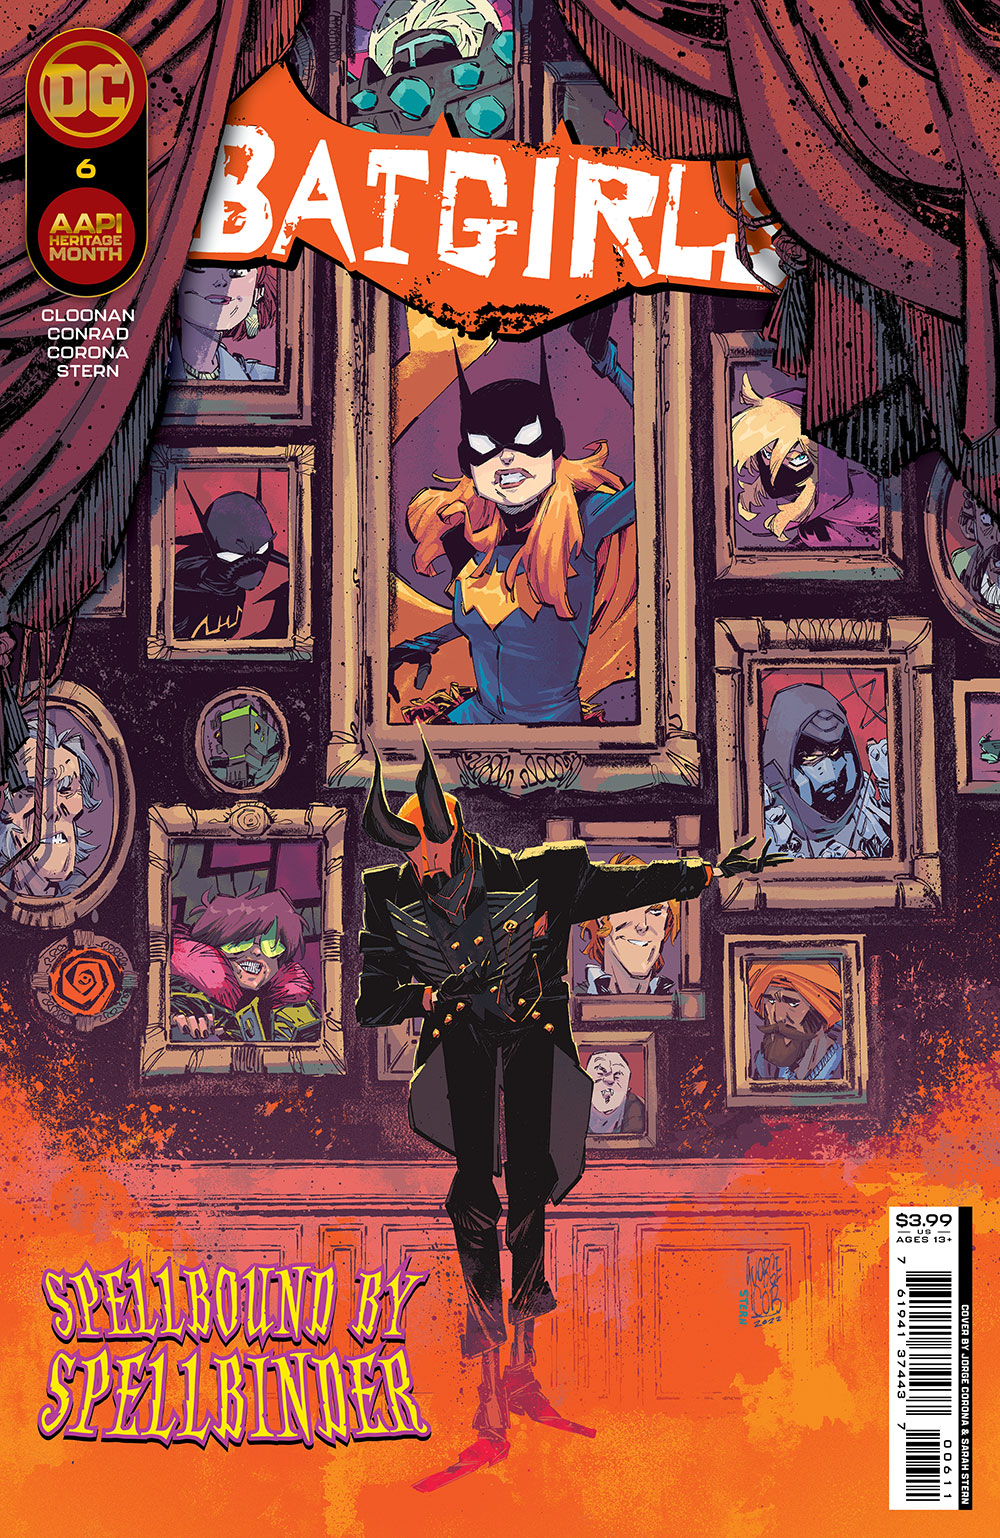 Batgirls #6 Cover A Jorge Corona